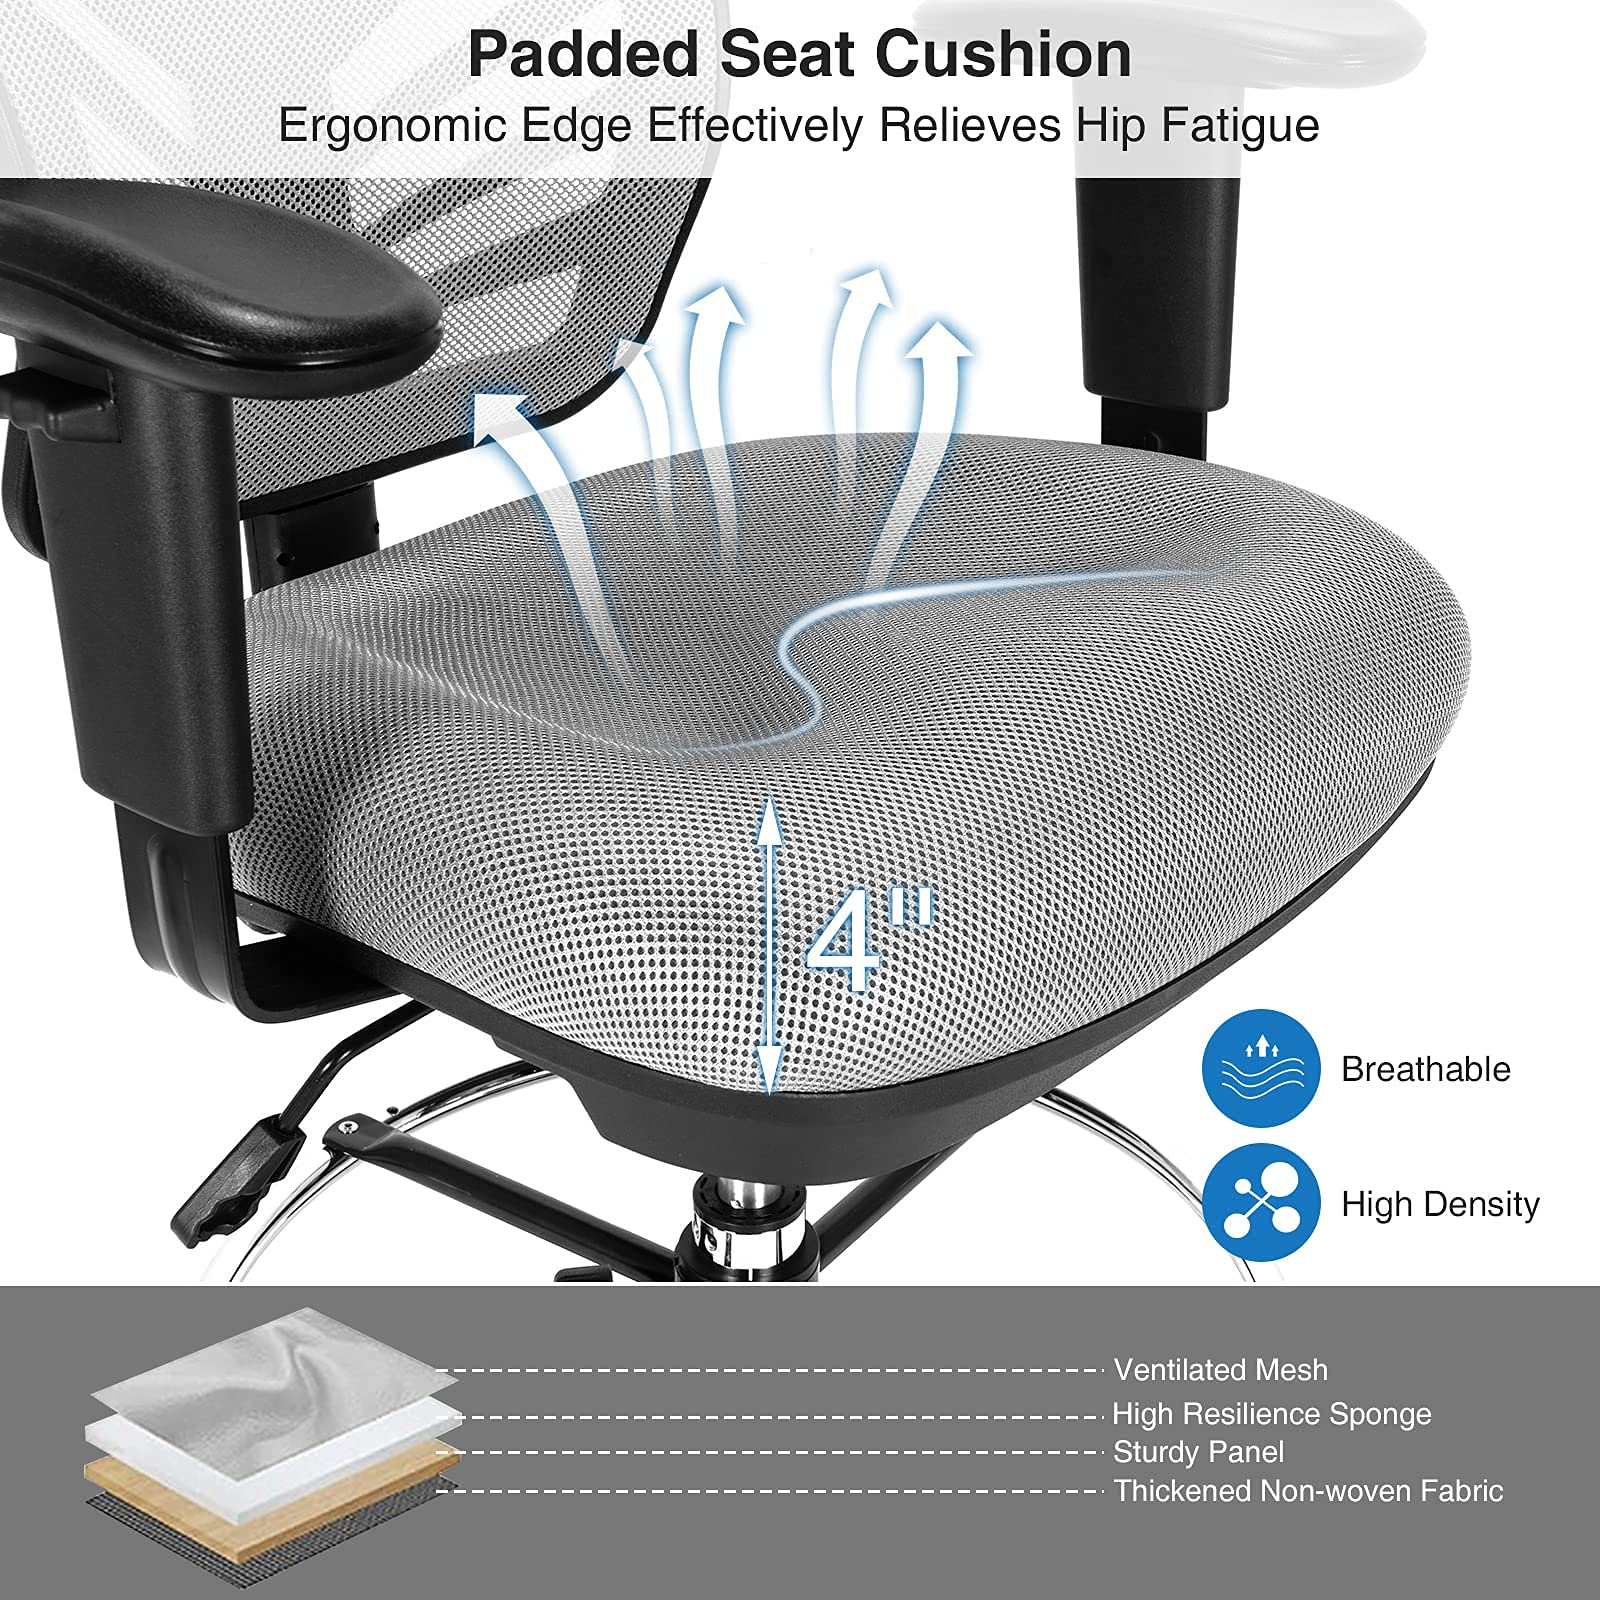 Giantex Mesh Drafting Chair, Standing Desk Chair